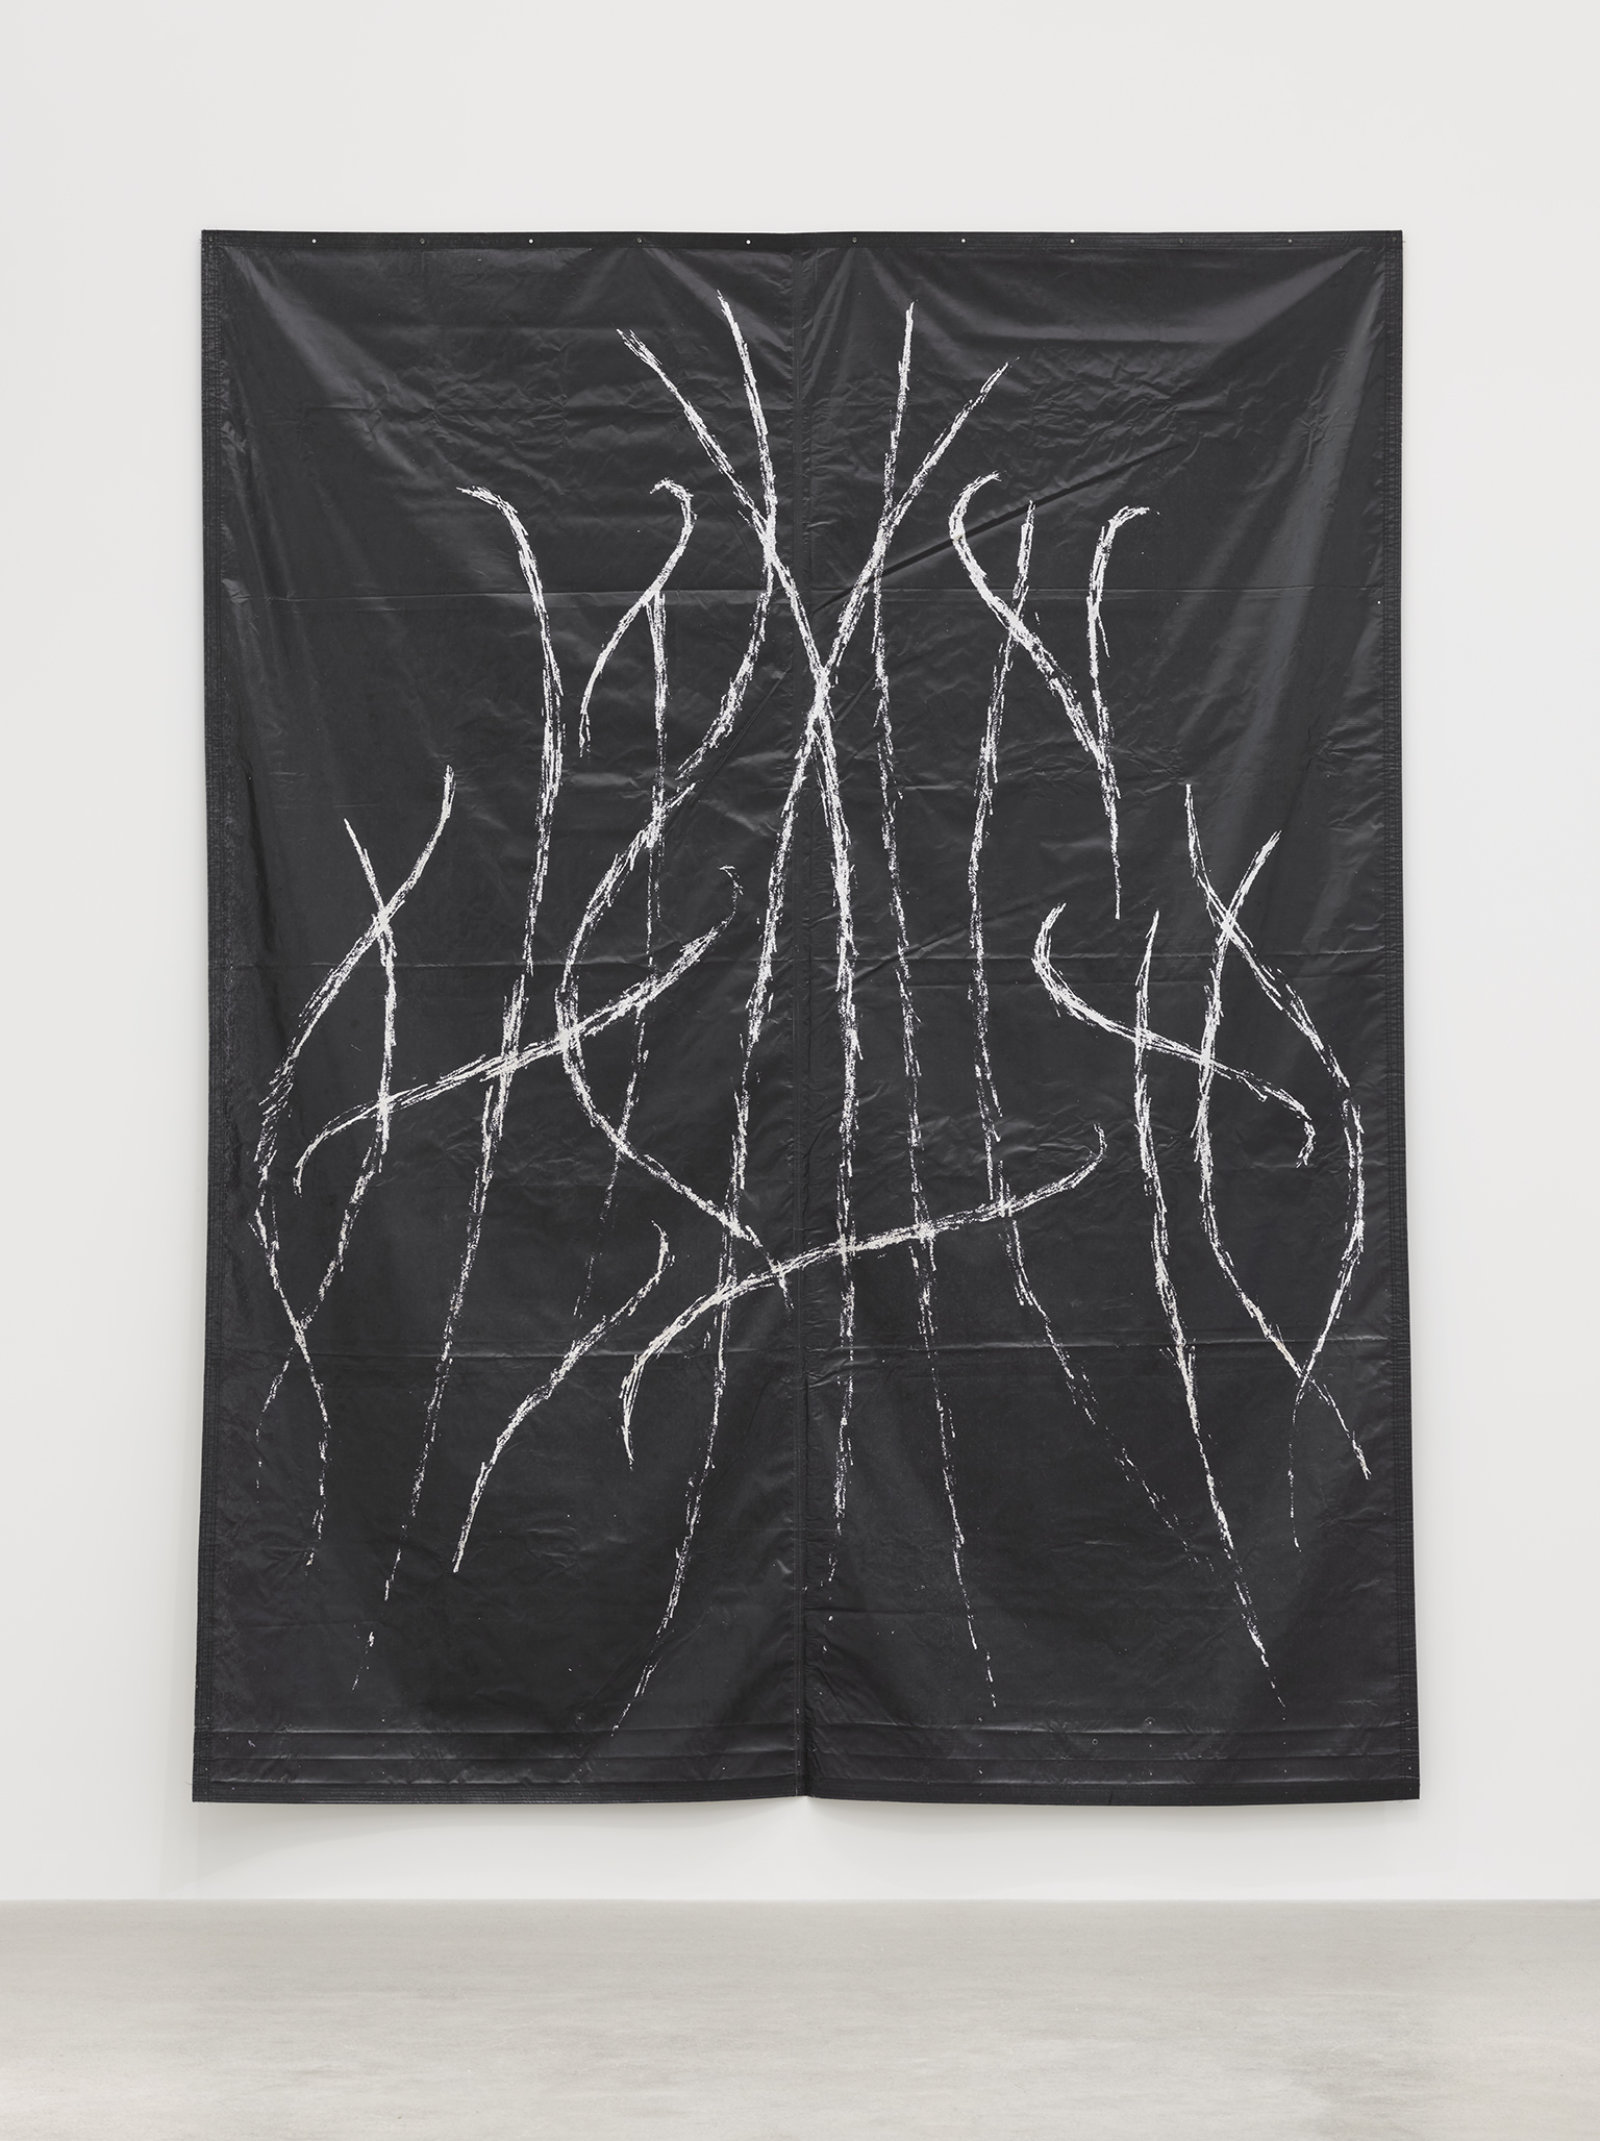 Raymond Boisjoly, C-H-I-C-A-G-O (allium tricoccum), 2014, vinyl print, 180 x 156 in. (457 x 396 cm)